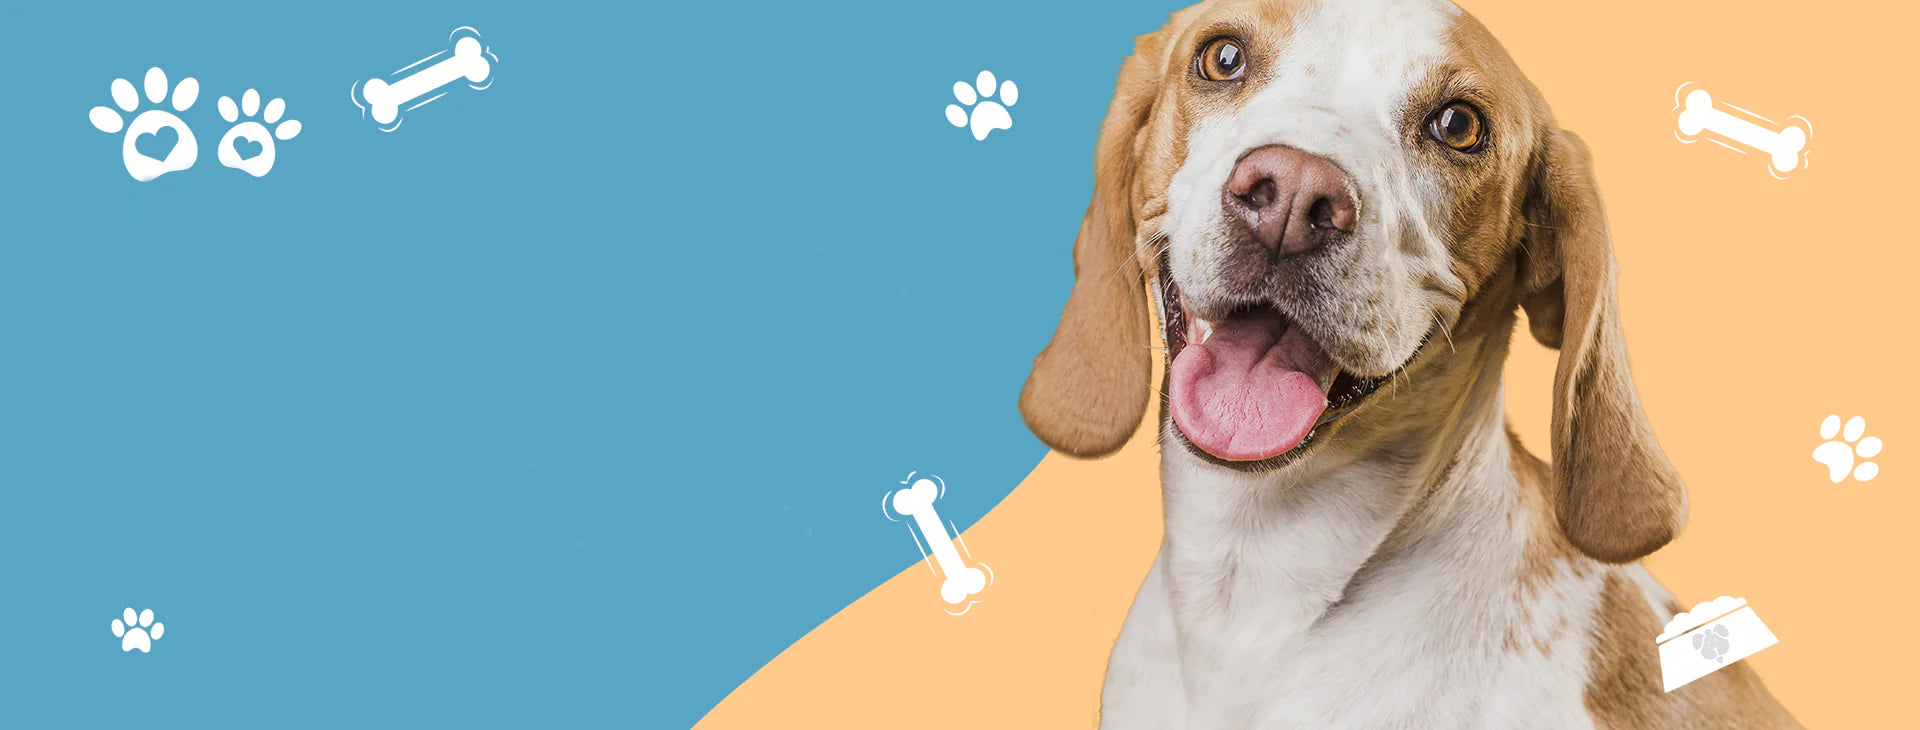 Happy beagle with cartoon dog bones and paws